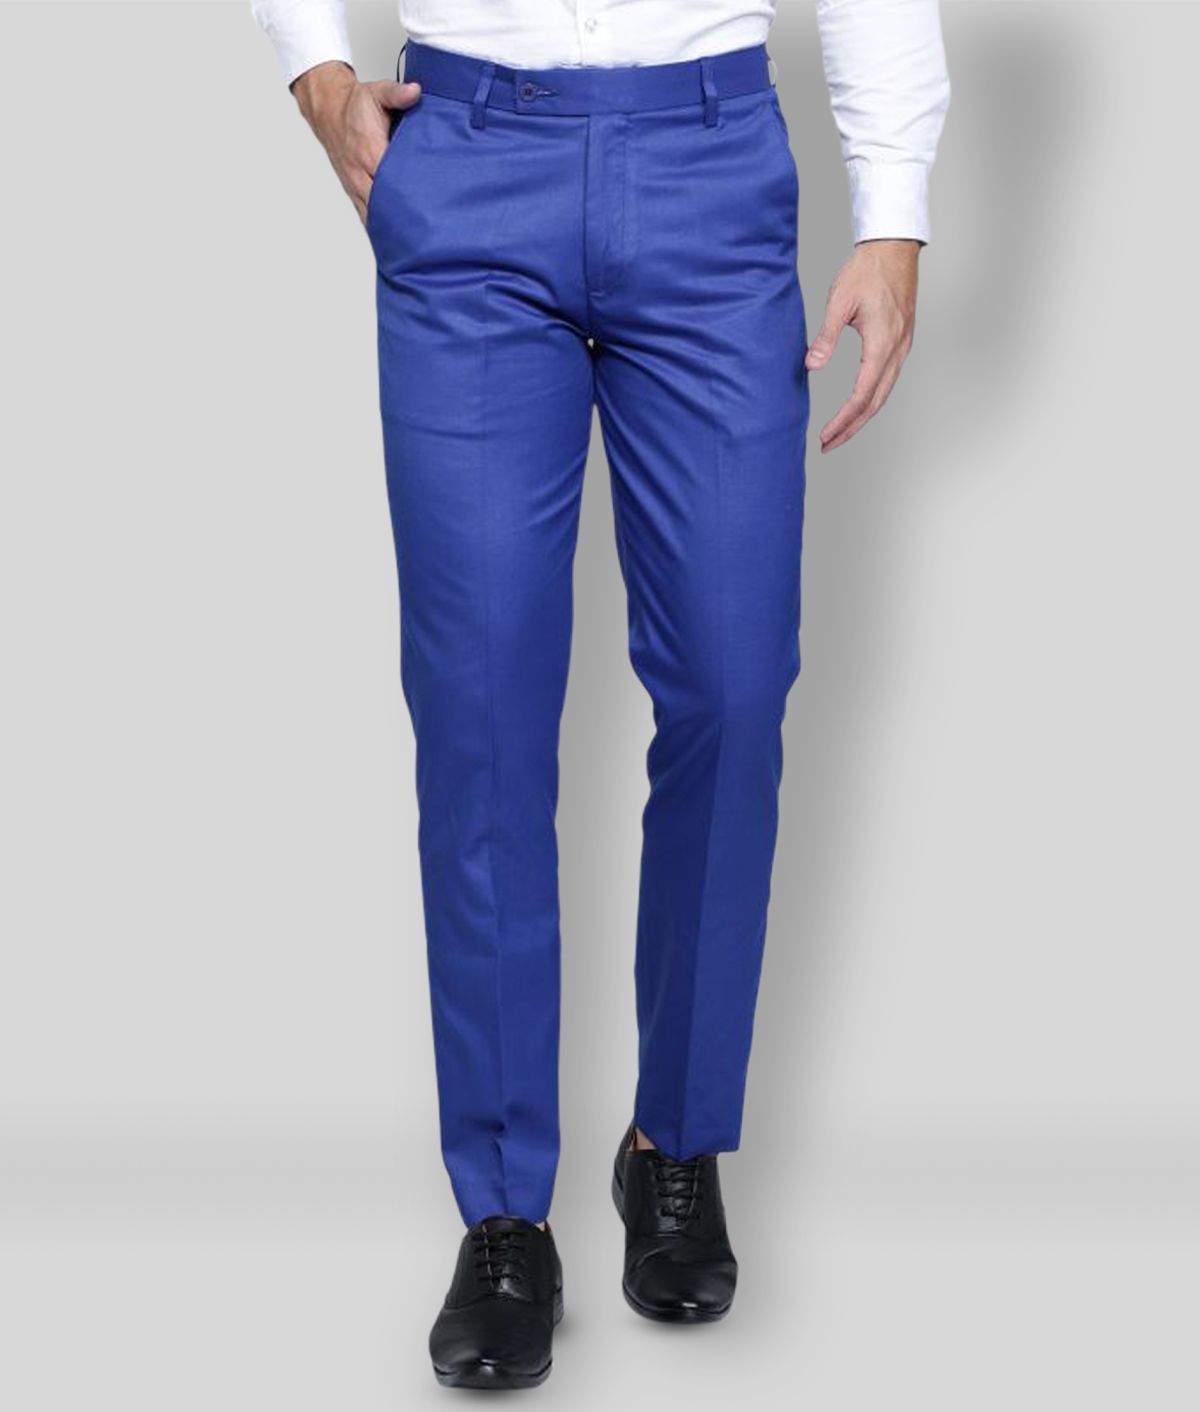     			Haul Chic - Indigo Blue Cotton Blend Slim Fit Men's Formal Pants (Pack of 1)